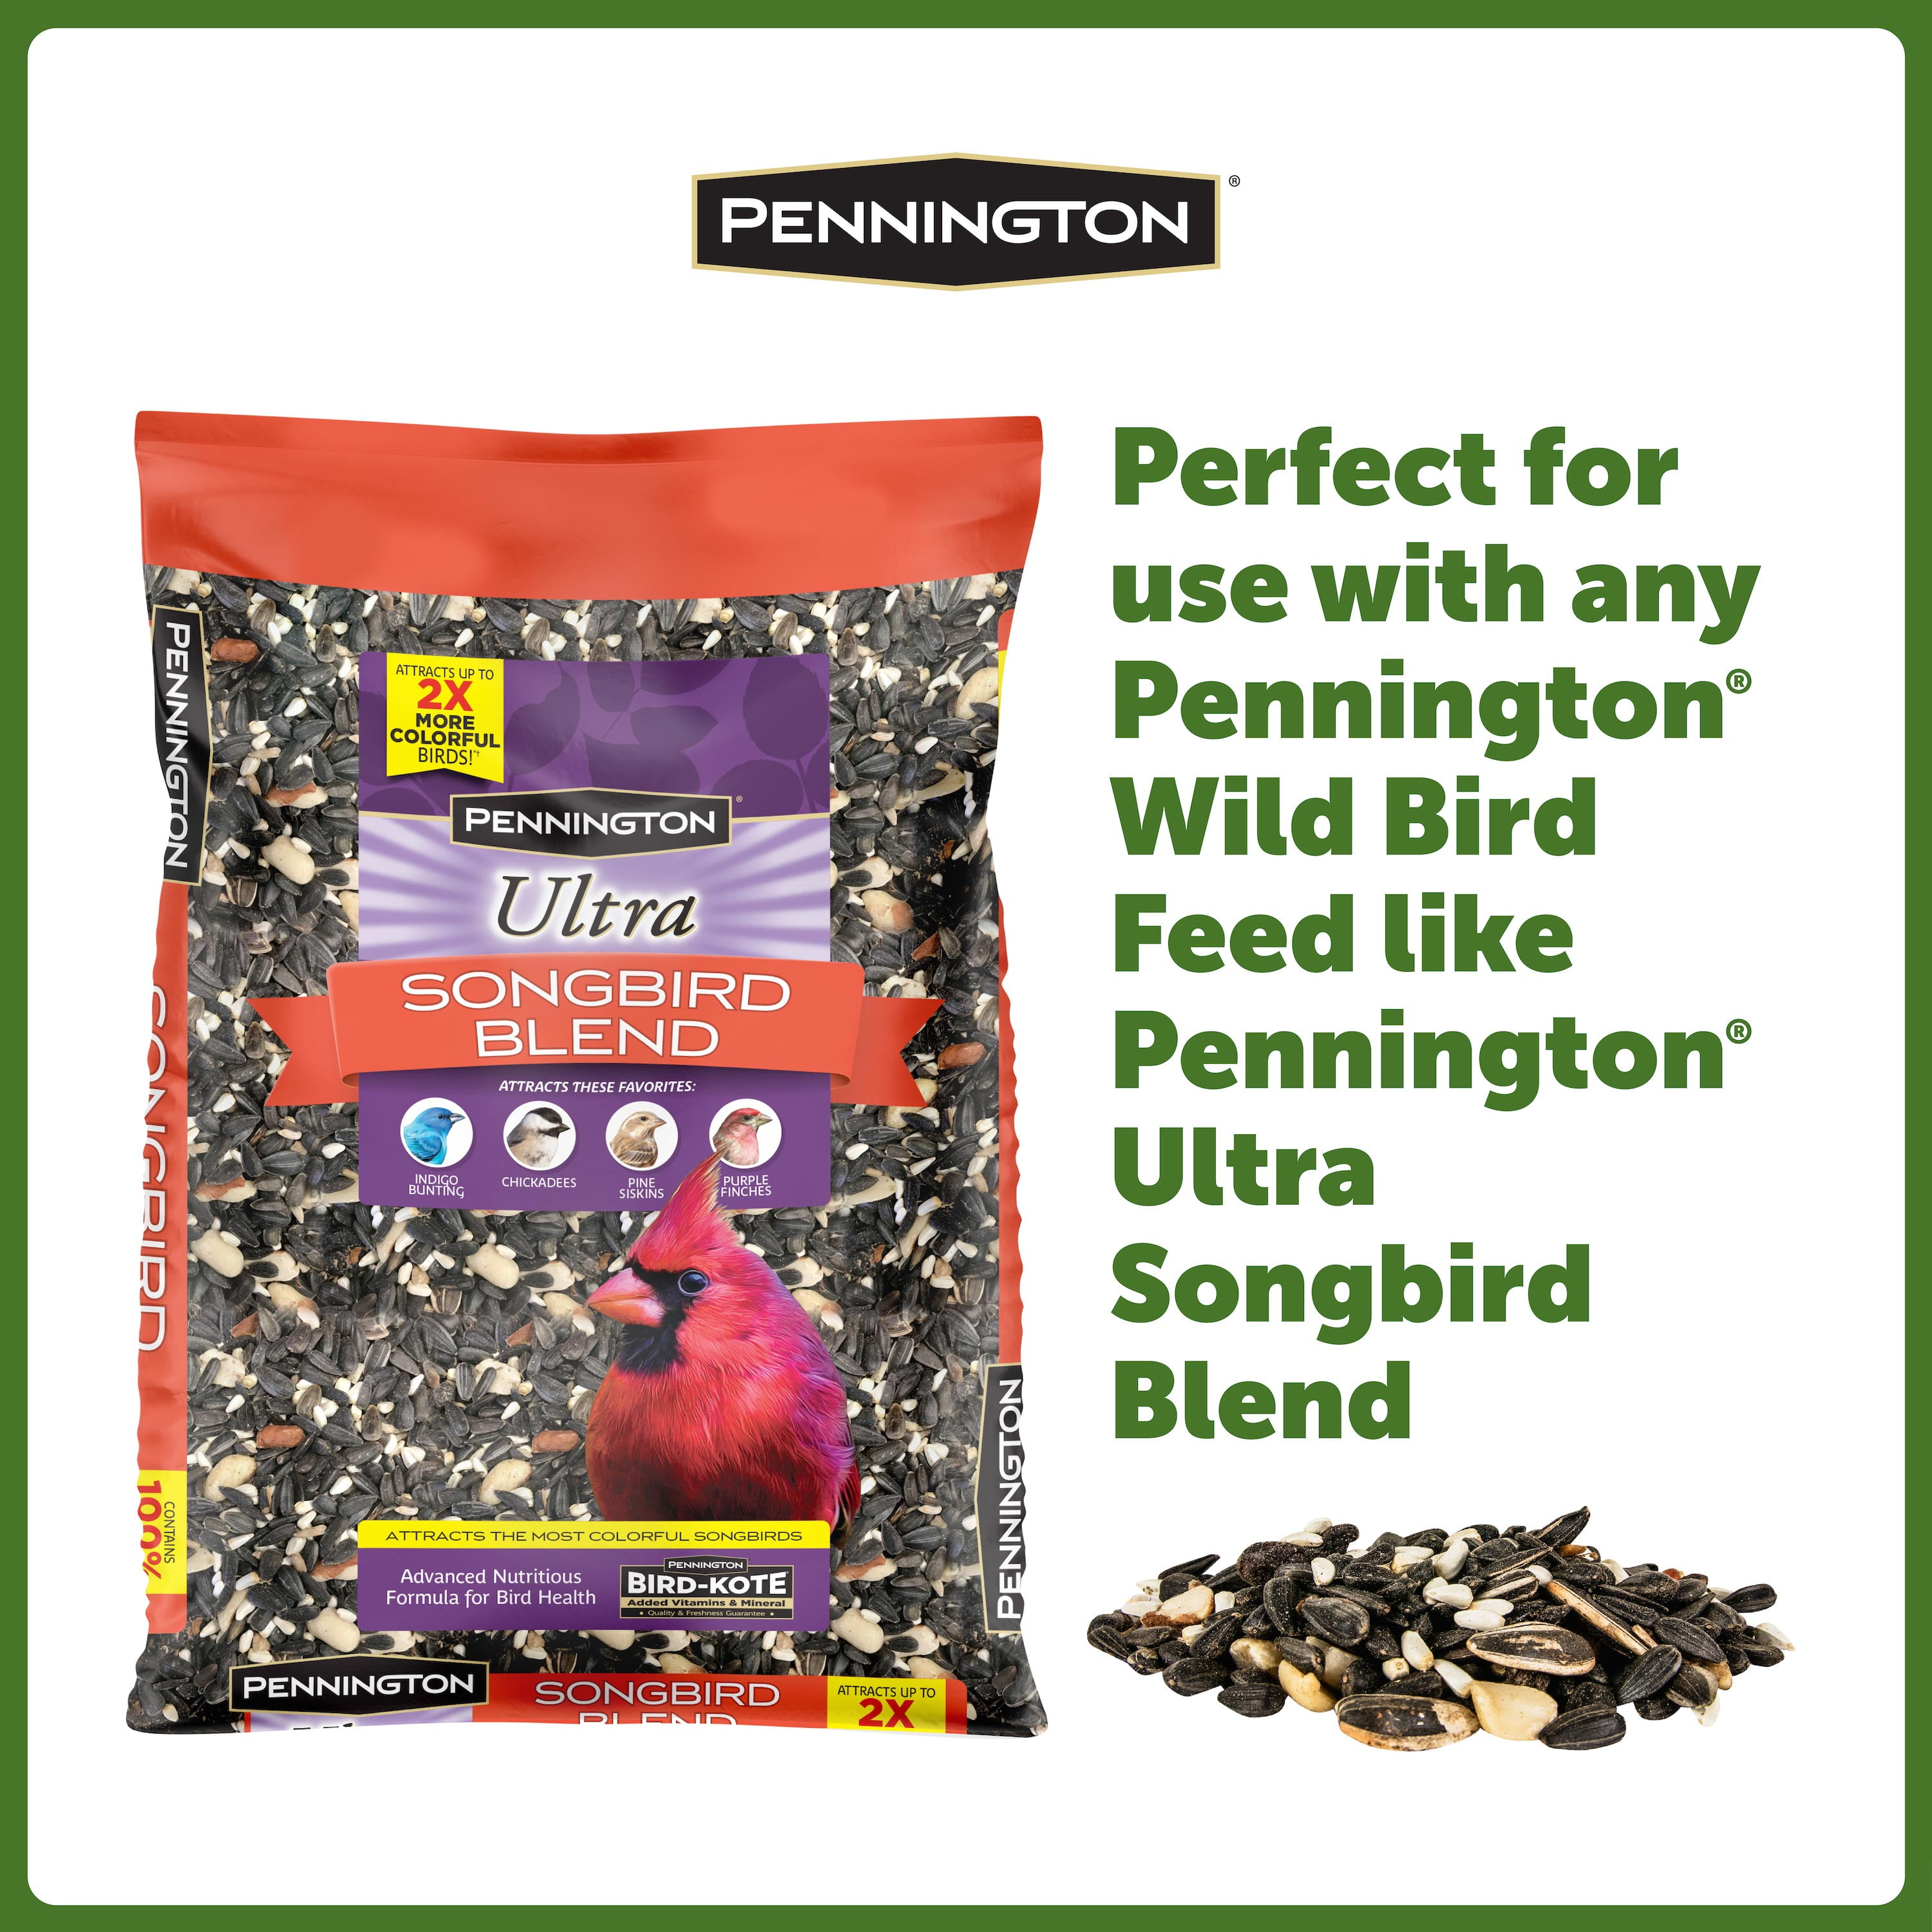 Pennington Earth Smart Red Recycled Resin Grand Ecozebo Wild Bird Feeder,  Jumbo 10 lb. Capacity, 1 Pack